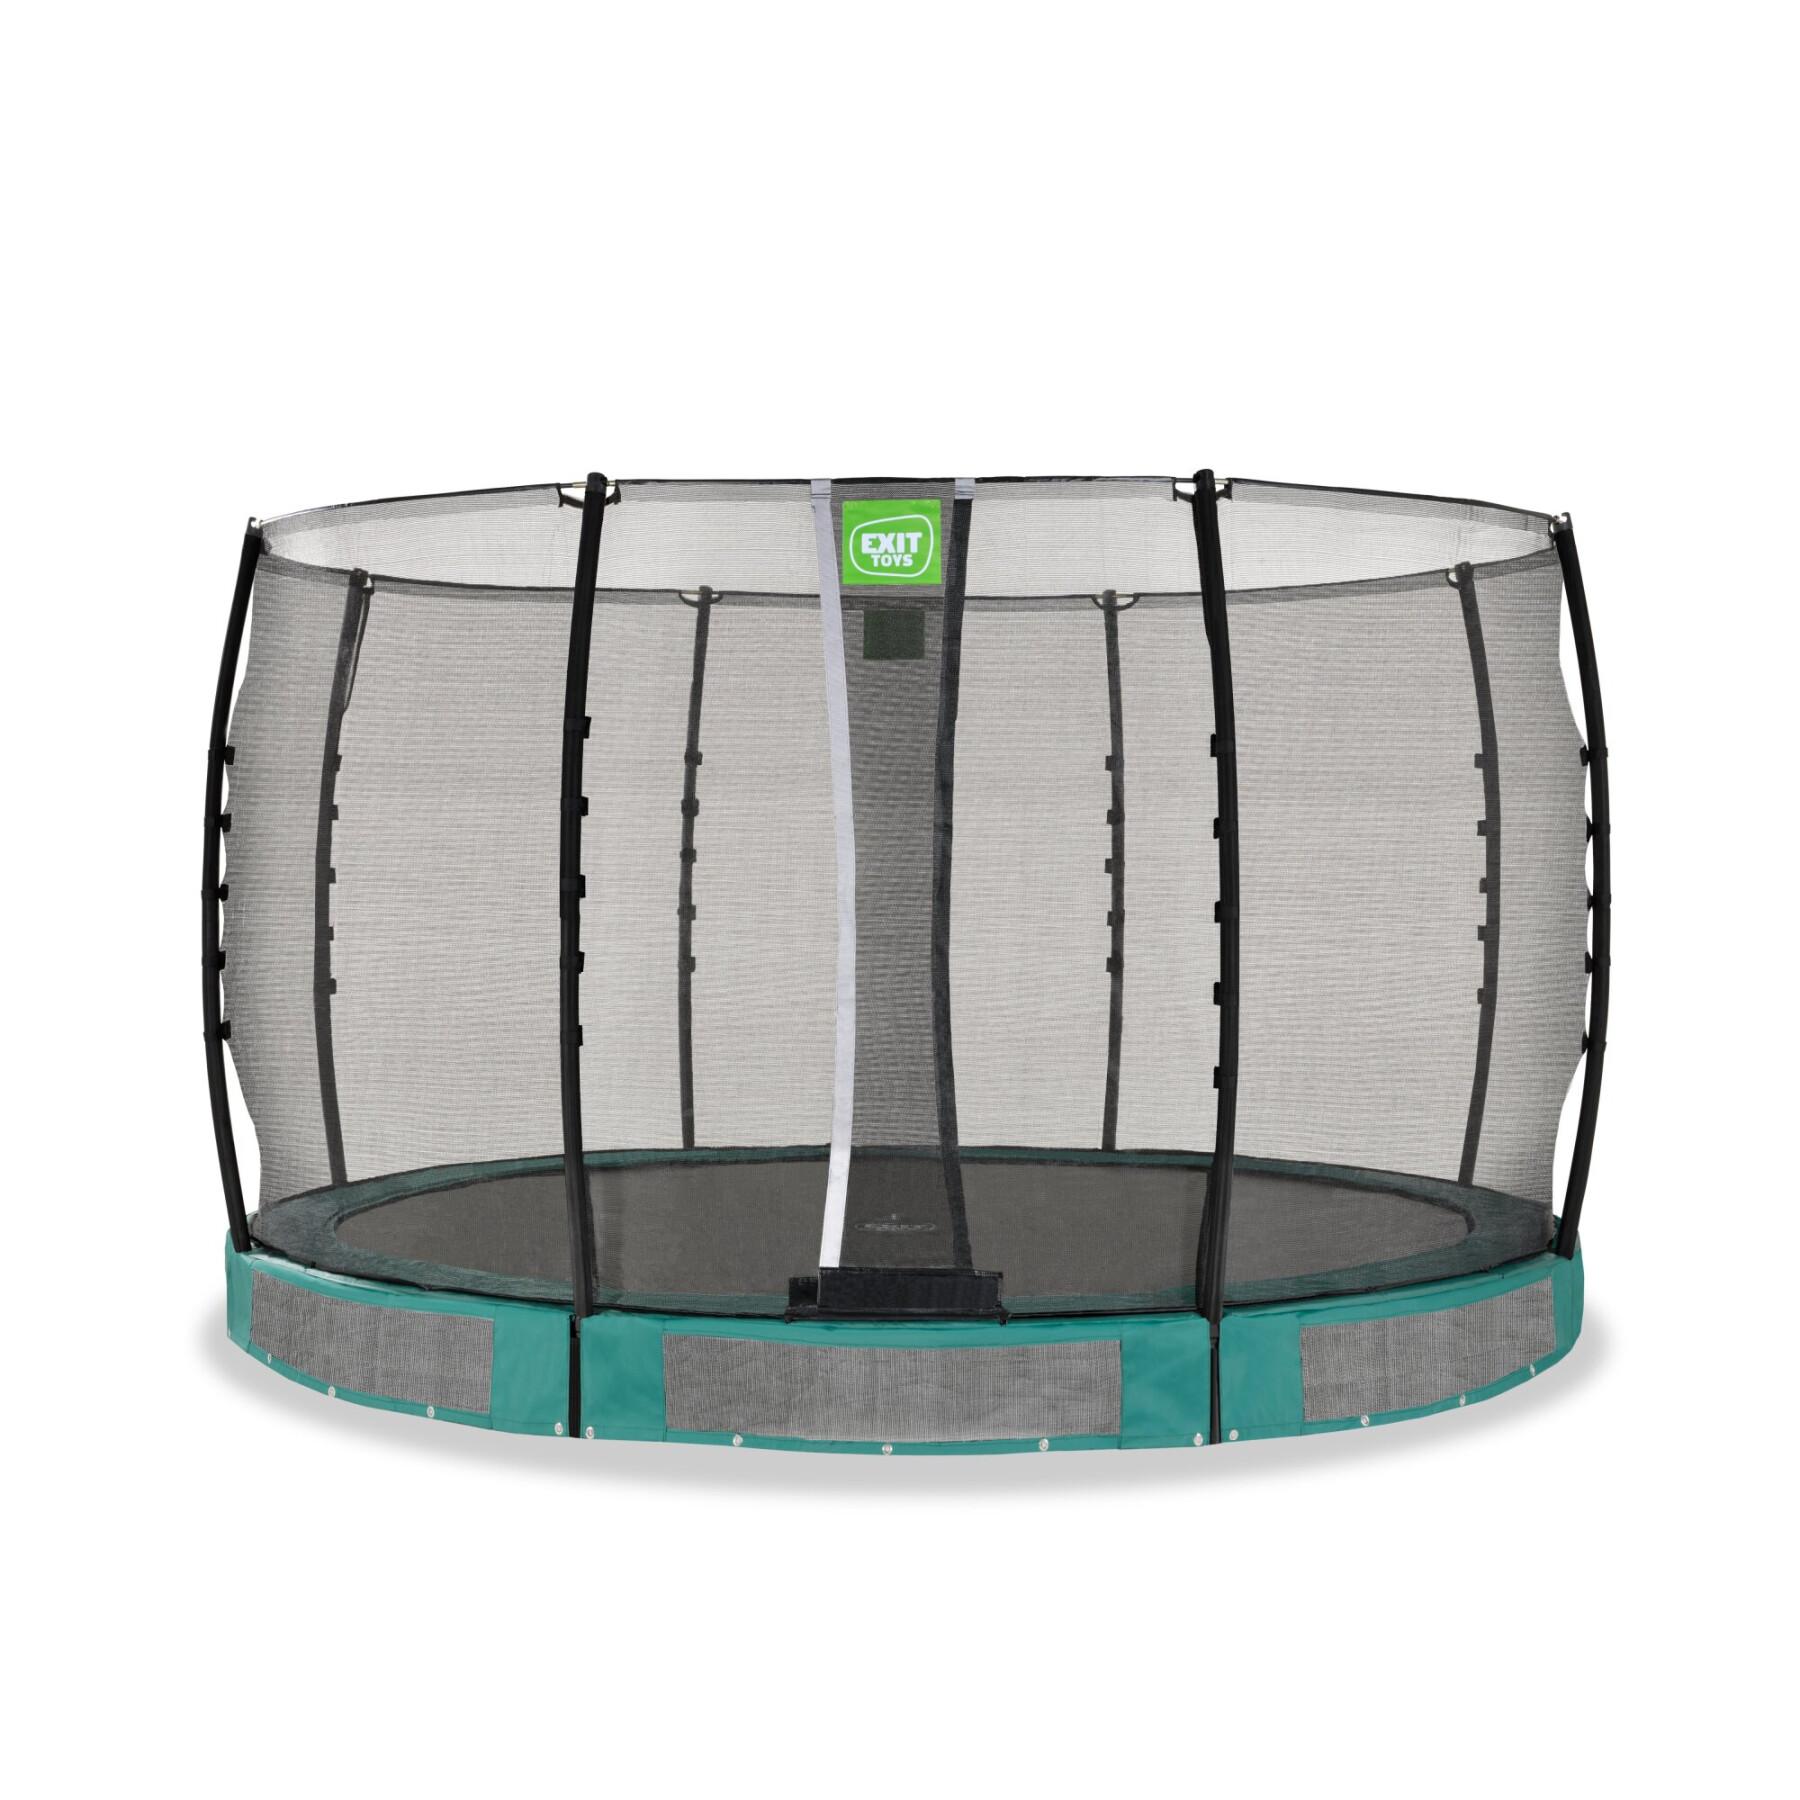 Podziemna trampolina Exit Toys Allure Classic 366 cm